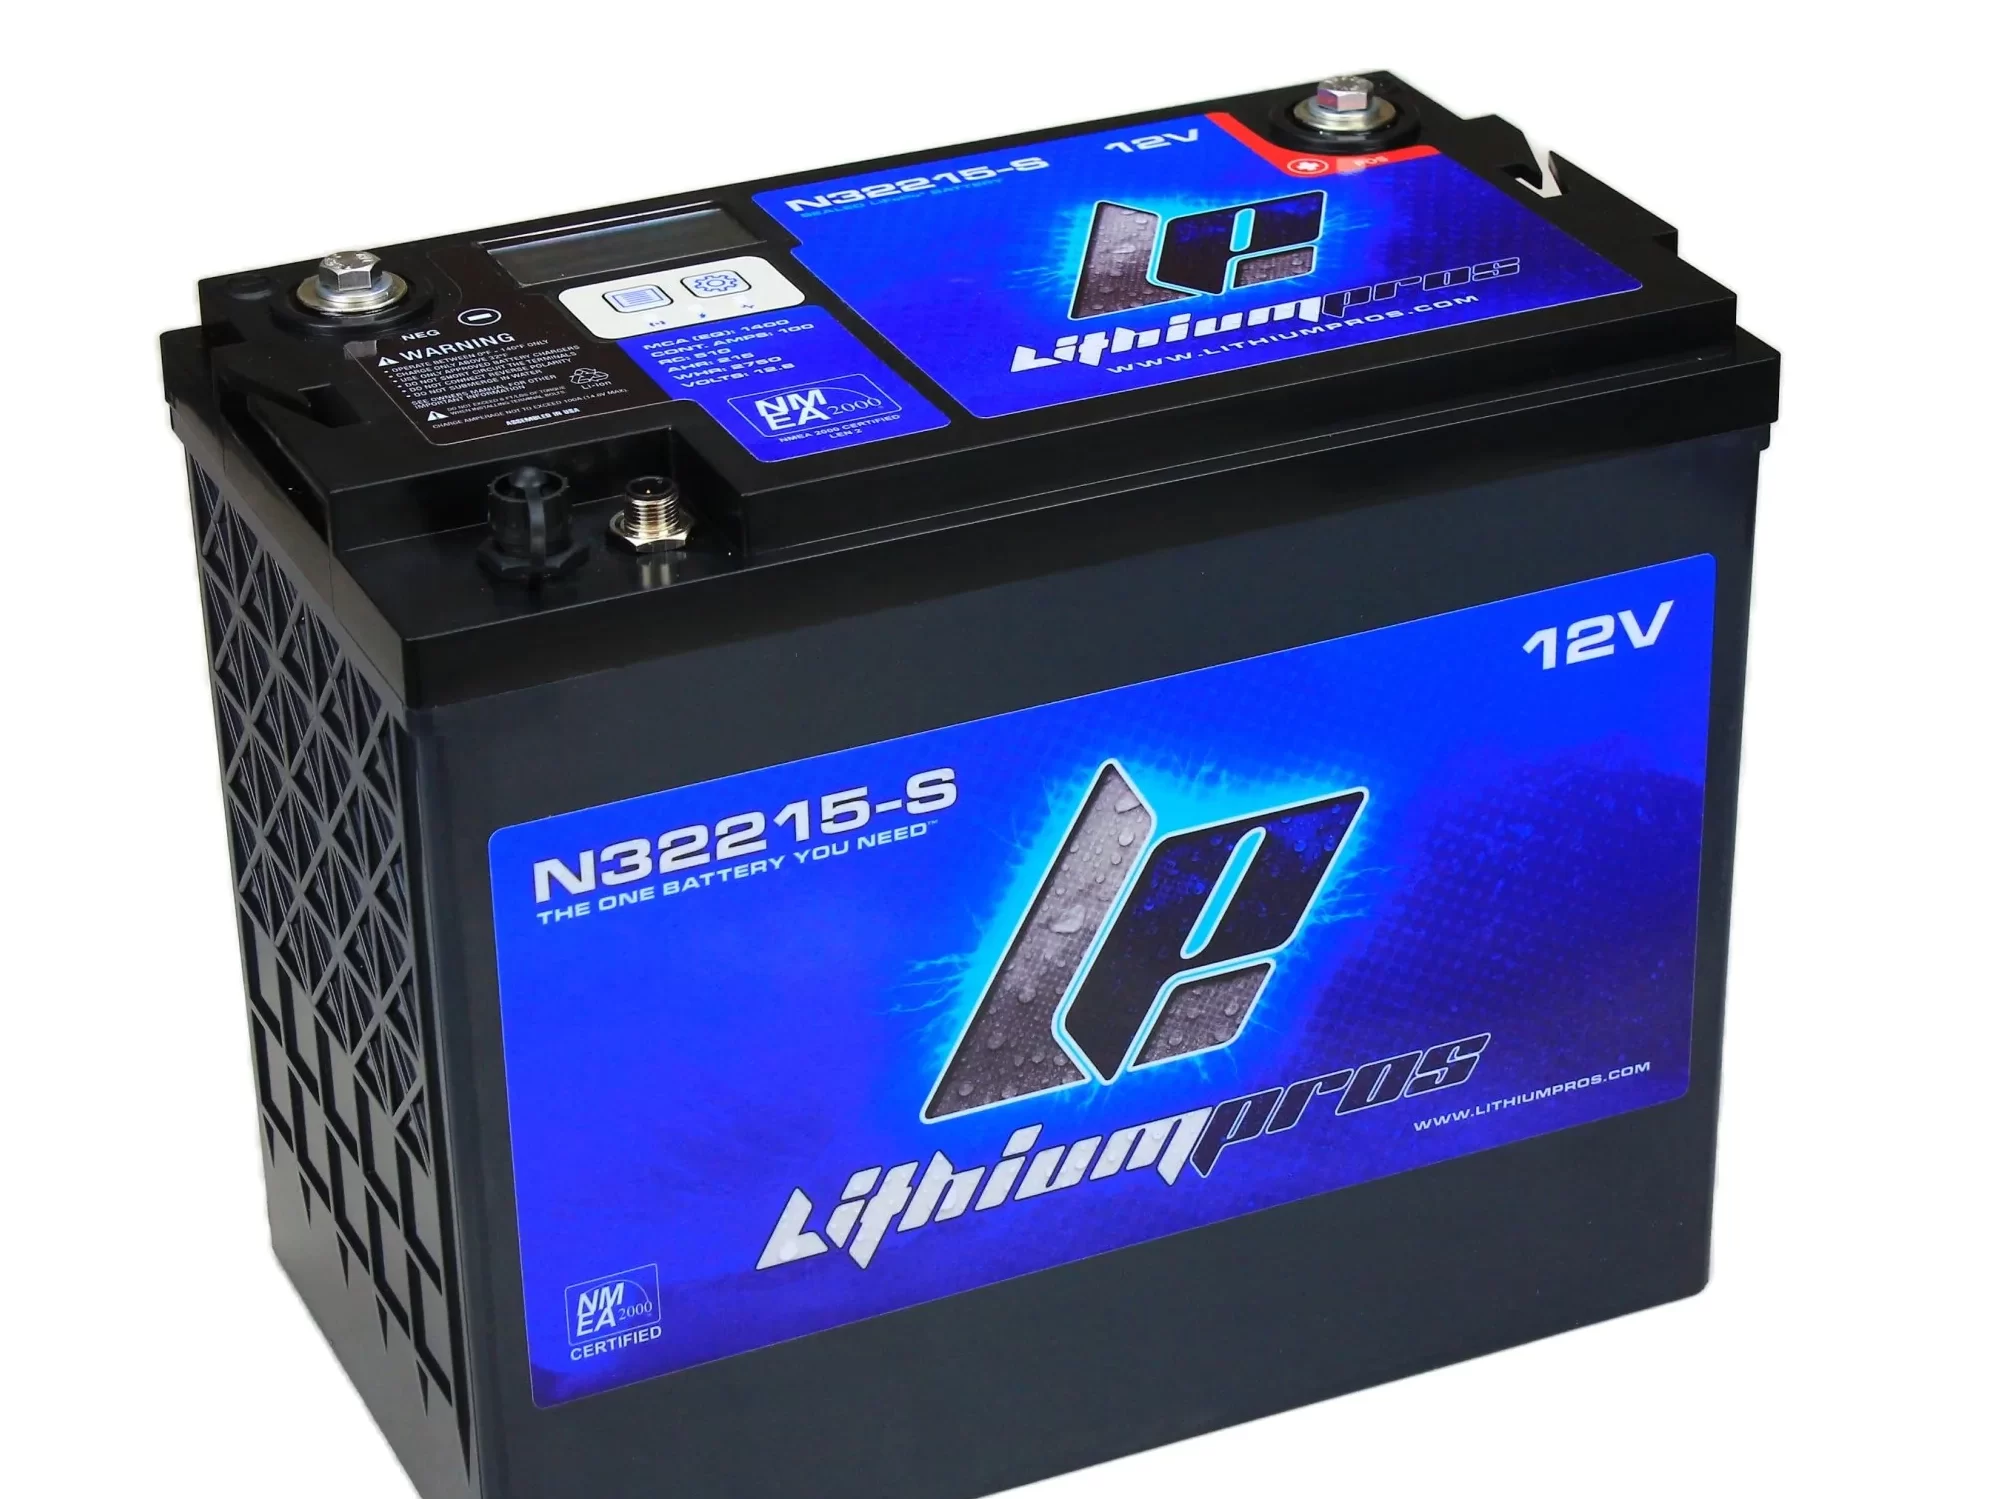 n32215-s-128v-215ah-marine-starting-battery-with-nmea-2000-996967_2048x